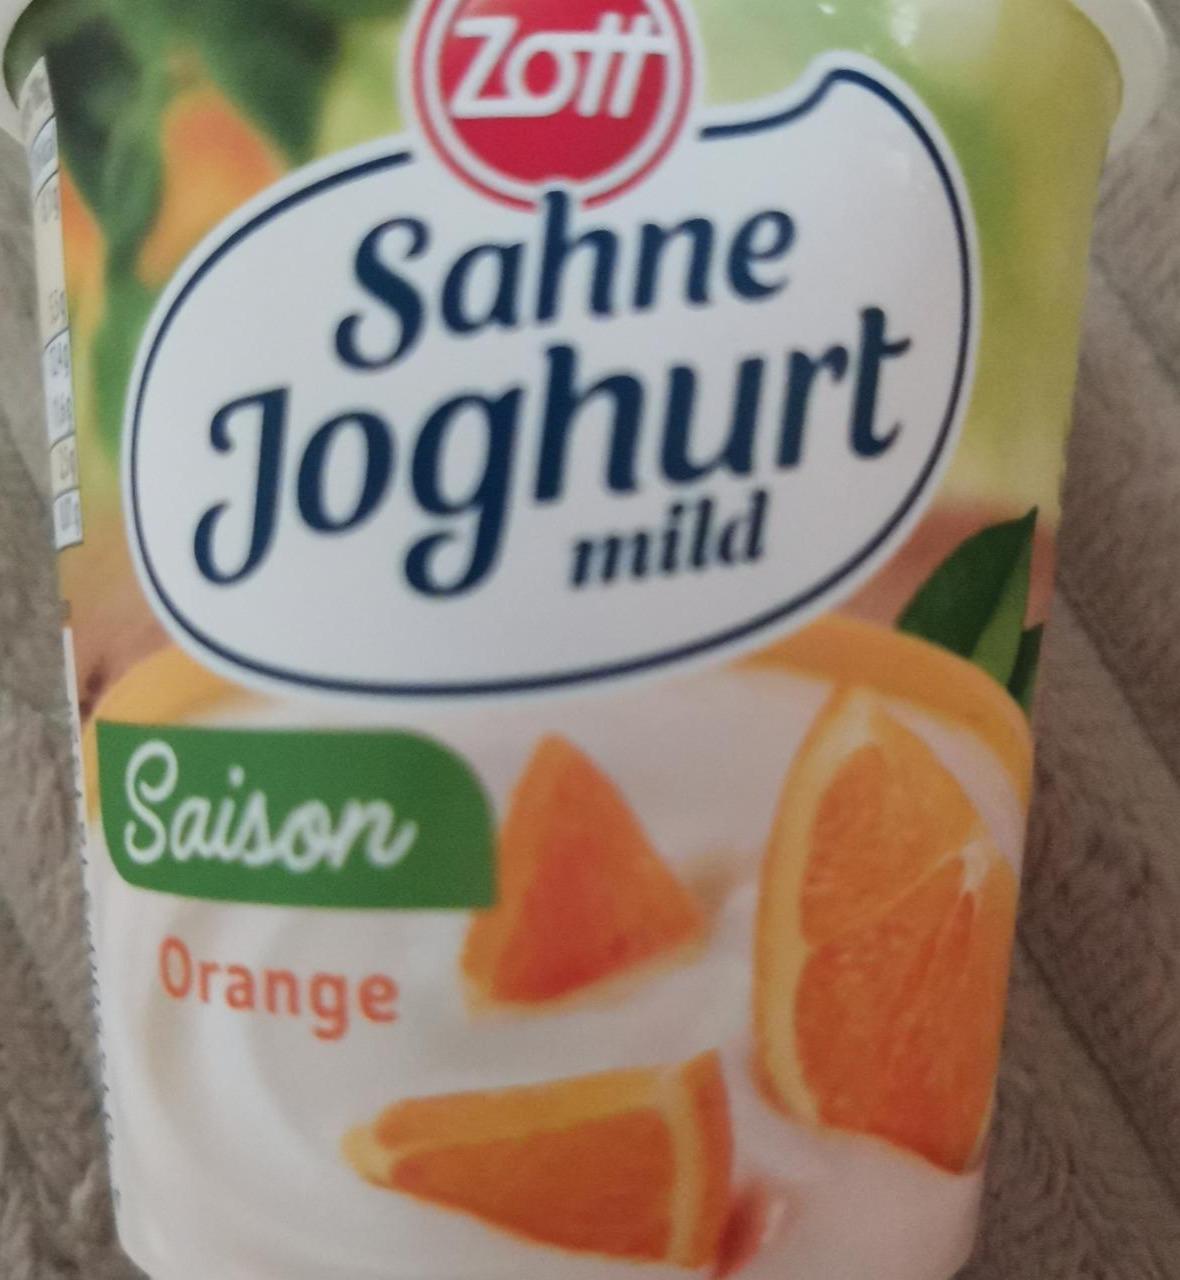 Fotografie - Sahne Joghurt mild Saison Orange Zott